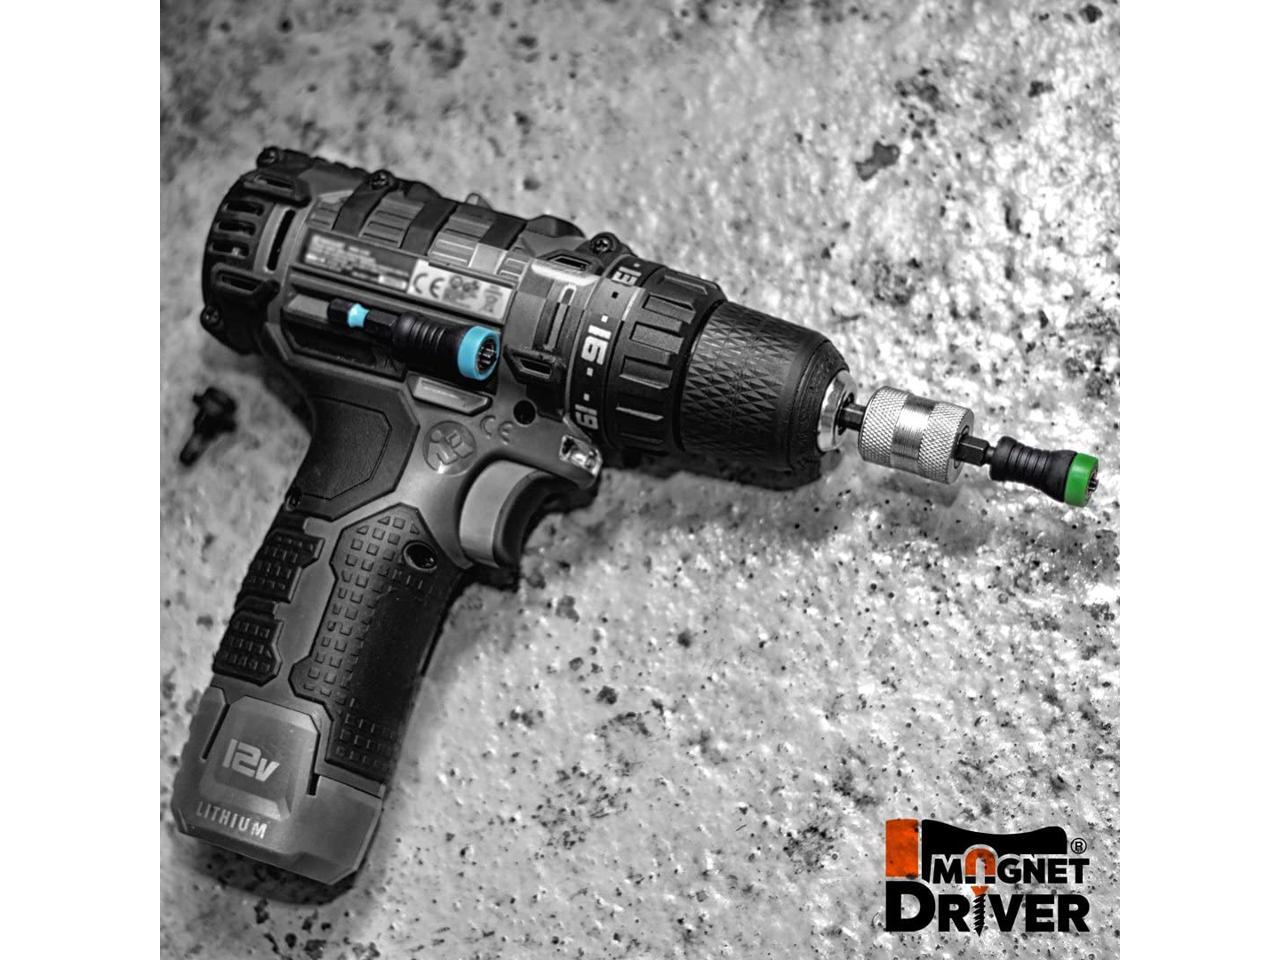 Magnet Driver B50 Screw Holder Magnetic Attachment Set Fits Screwdrivers/Drills 